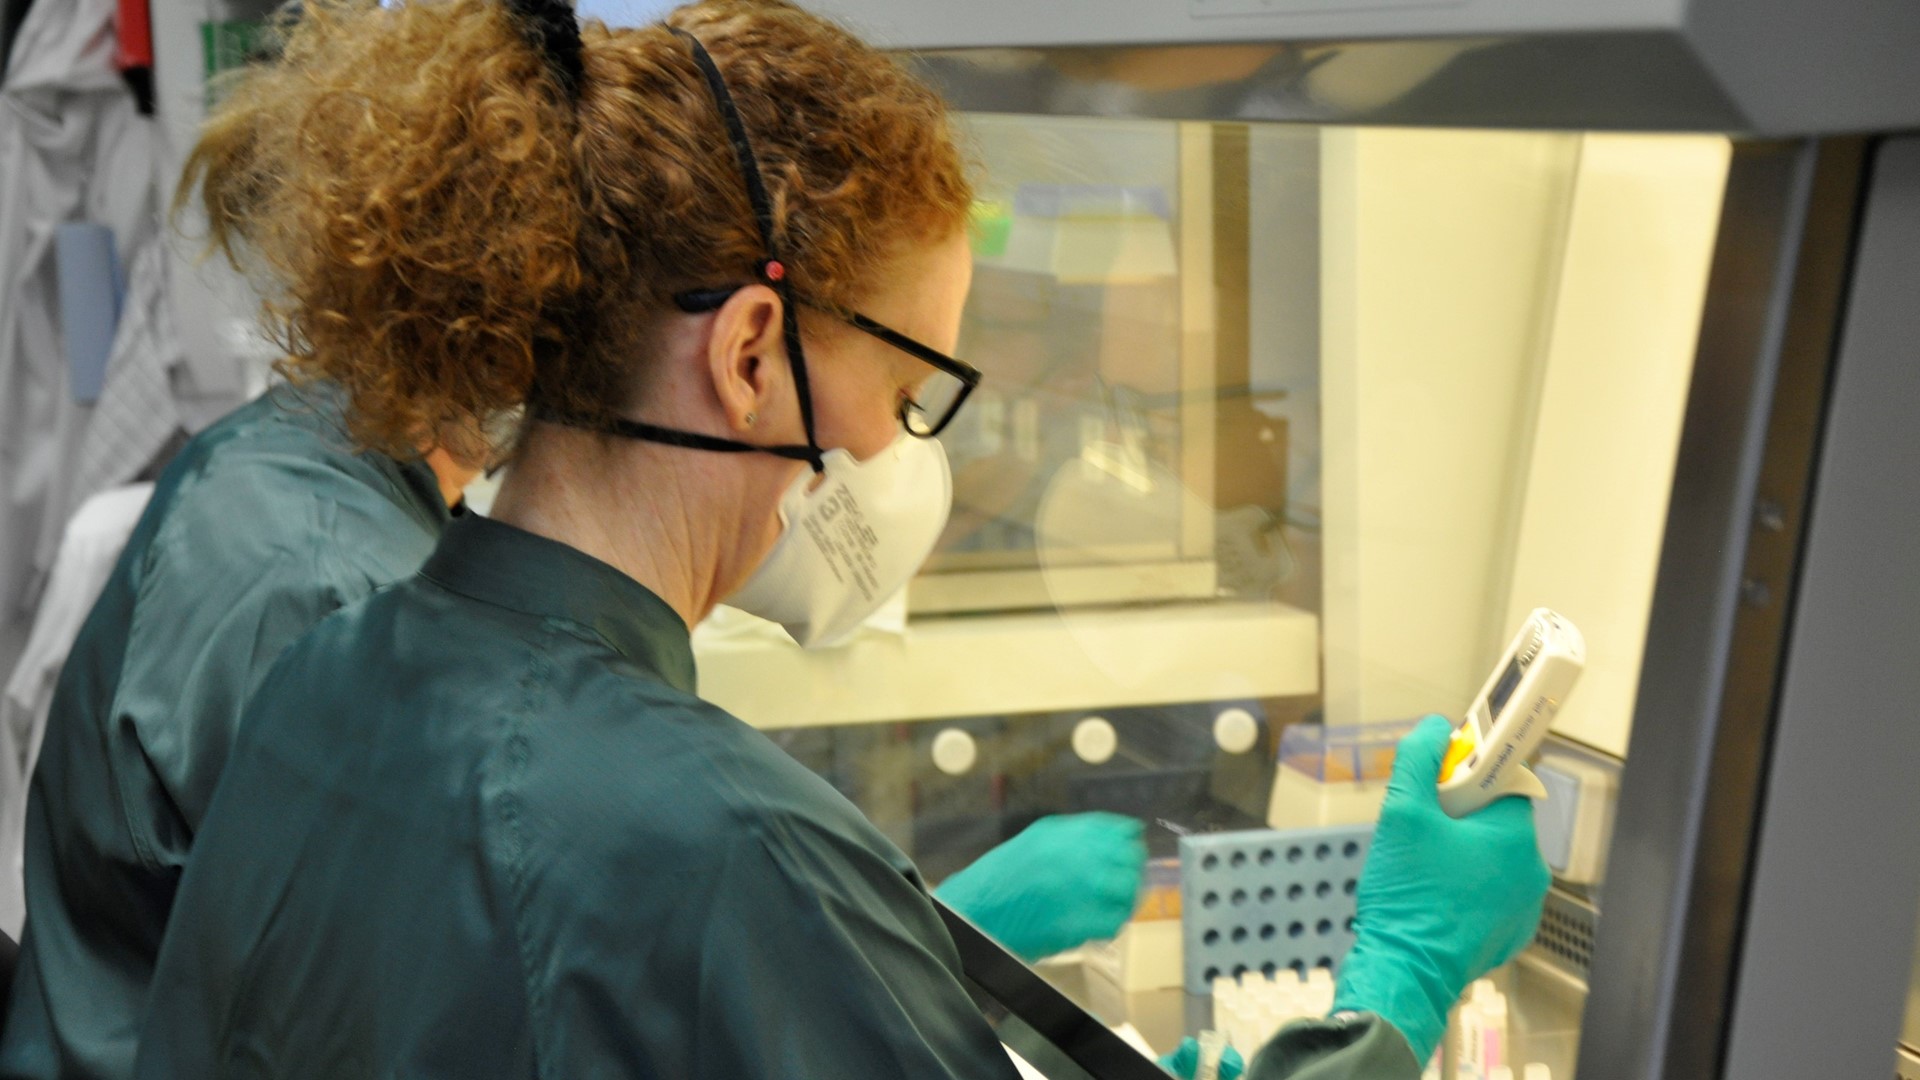 Novo Nordisk dedicates laboratory to COVID-19 testing